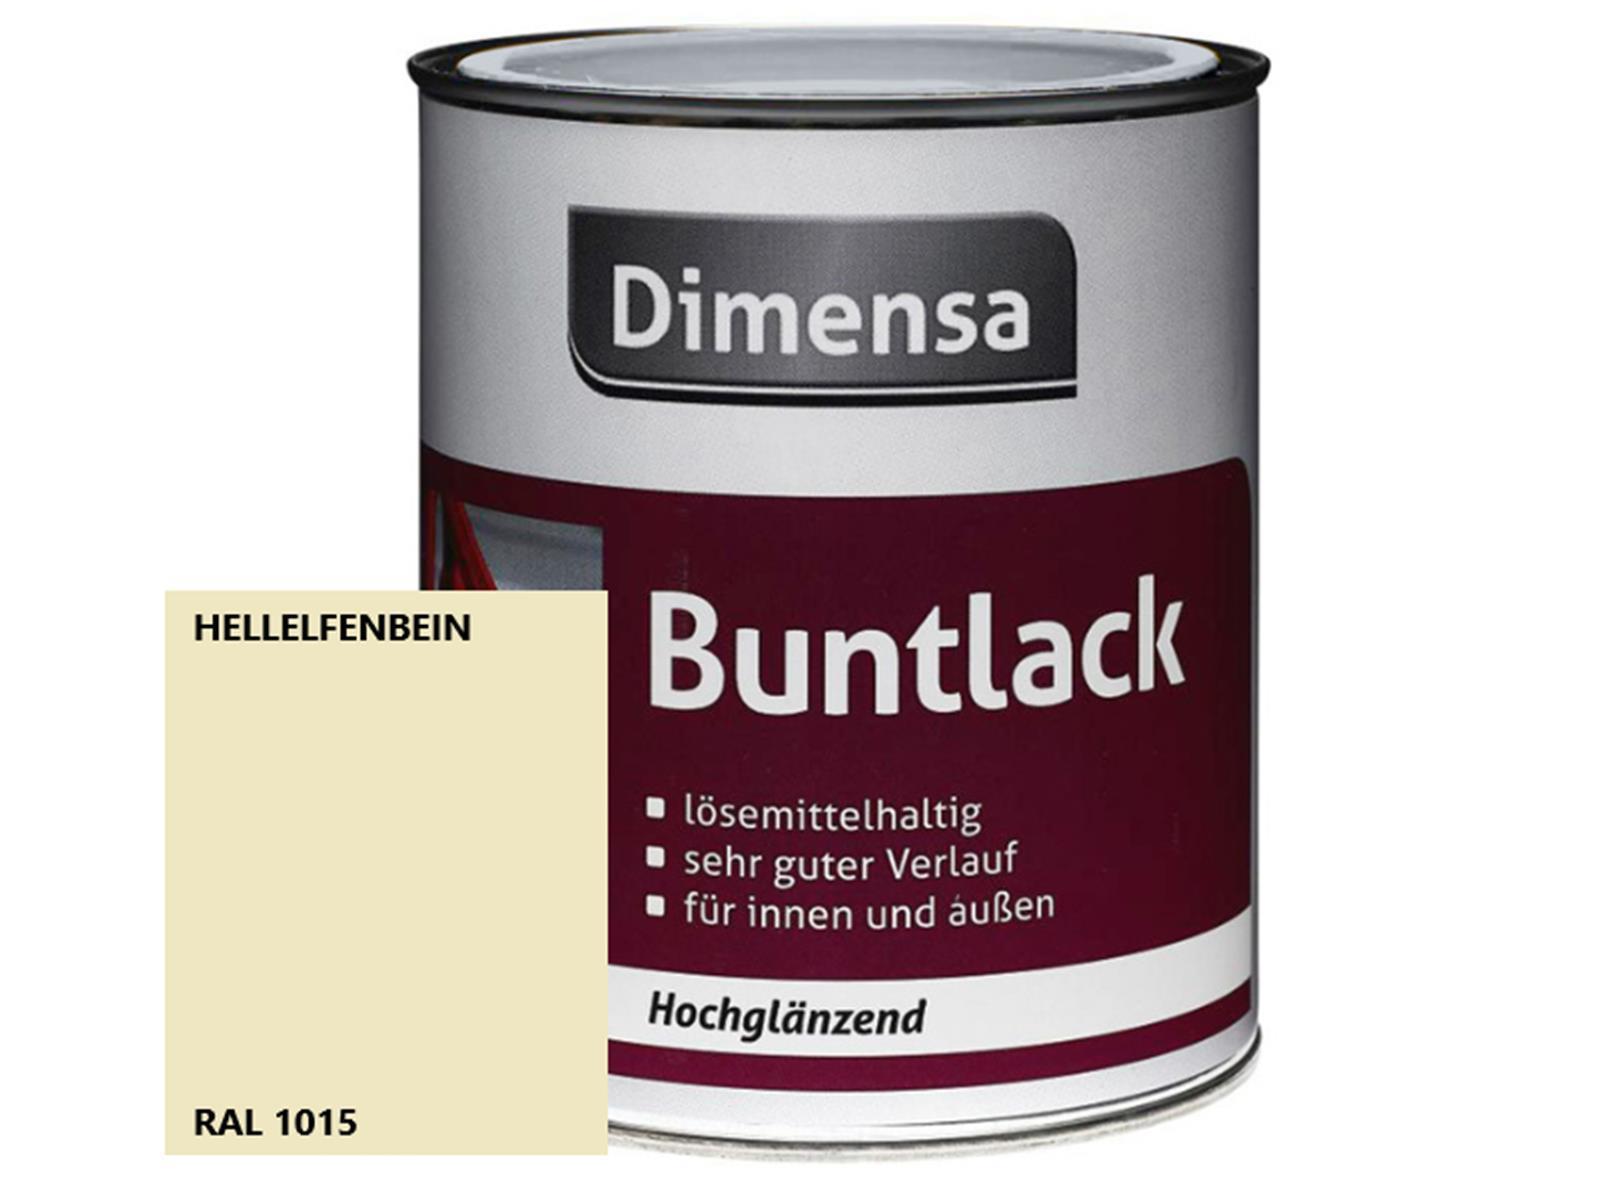 Dimensa Buntlack hochglänzend Hell Elfenbein 0,375L RAL 1015